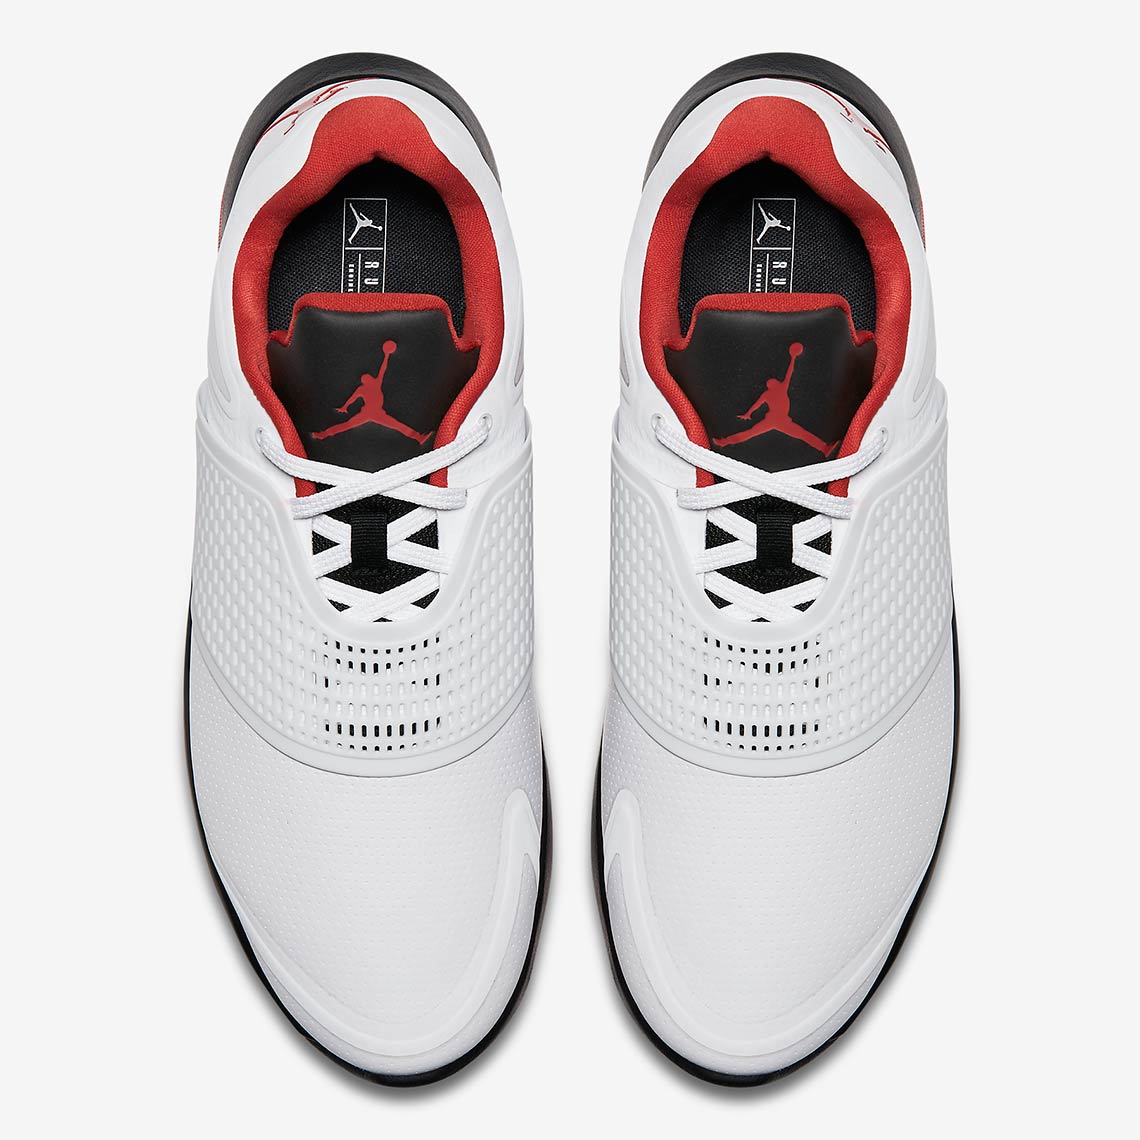 Jordan Grind 2 Running Shoe Available Now | SneakerNews.com